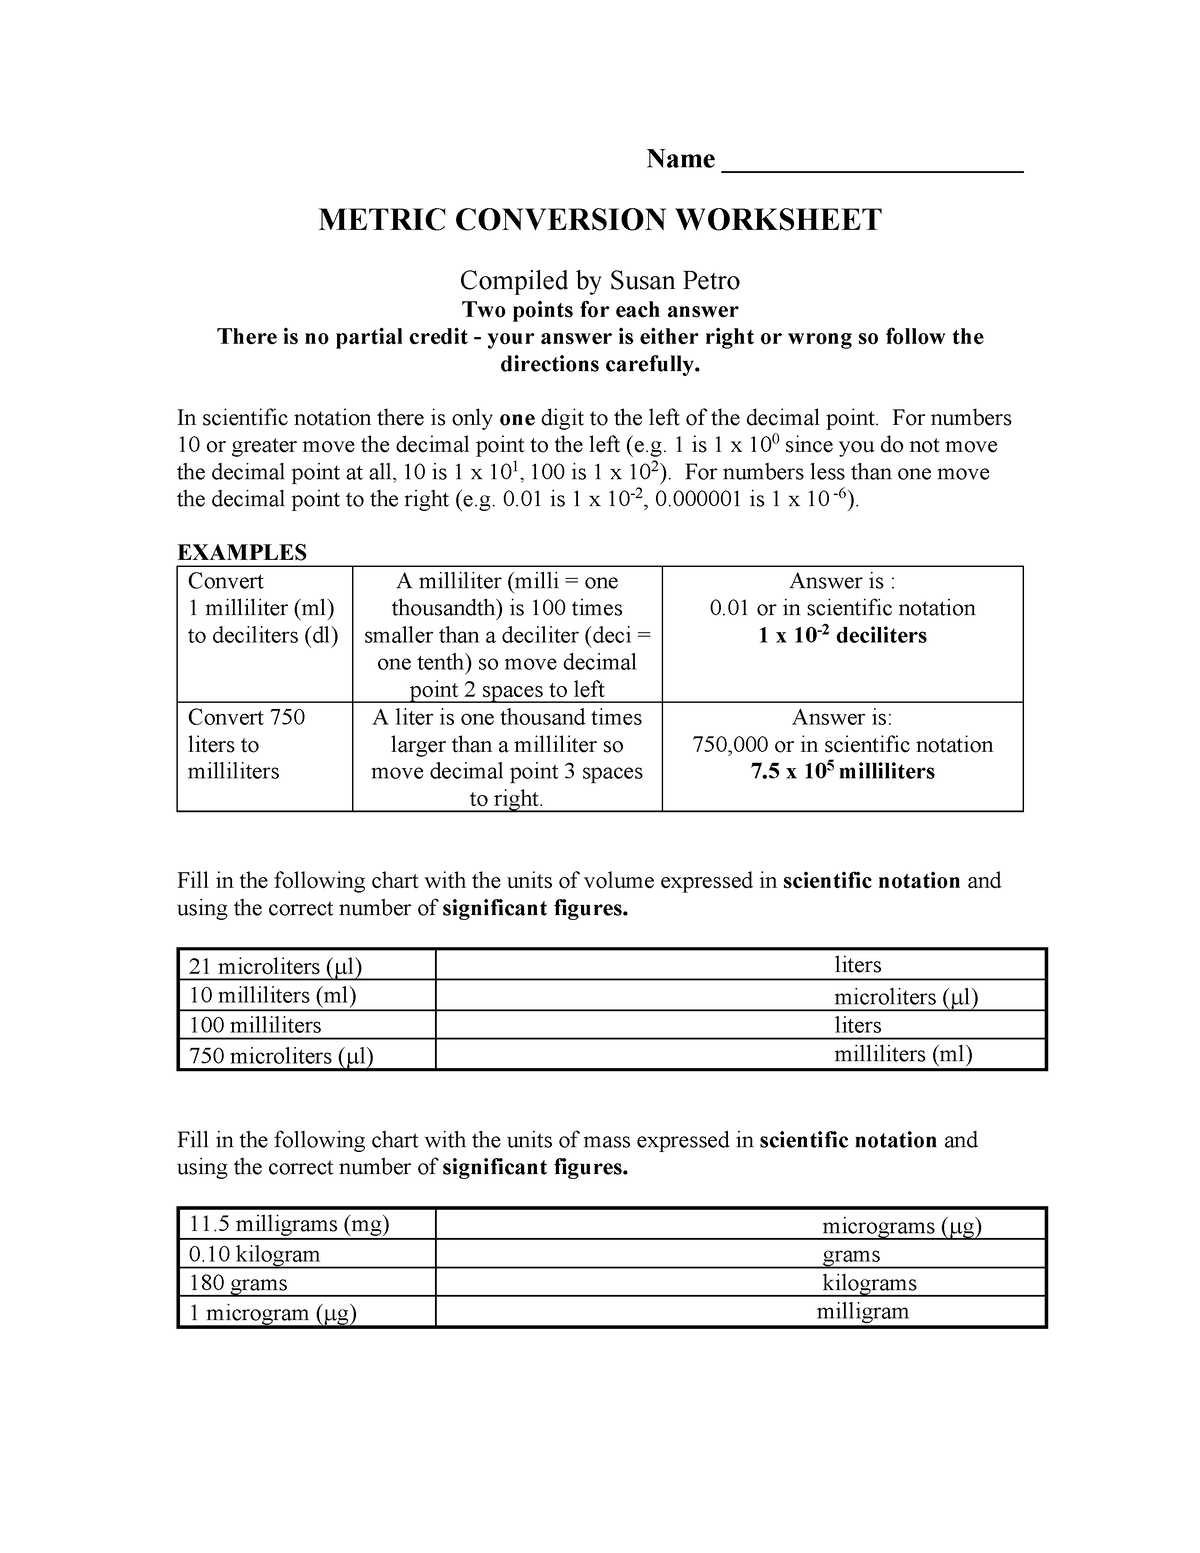 bio-lab-metric-conversion-name-metric-conversion-worksheet-compiled-by